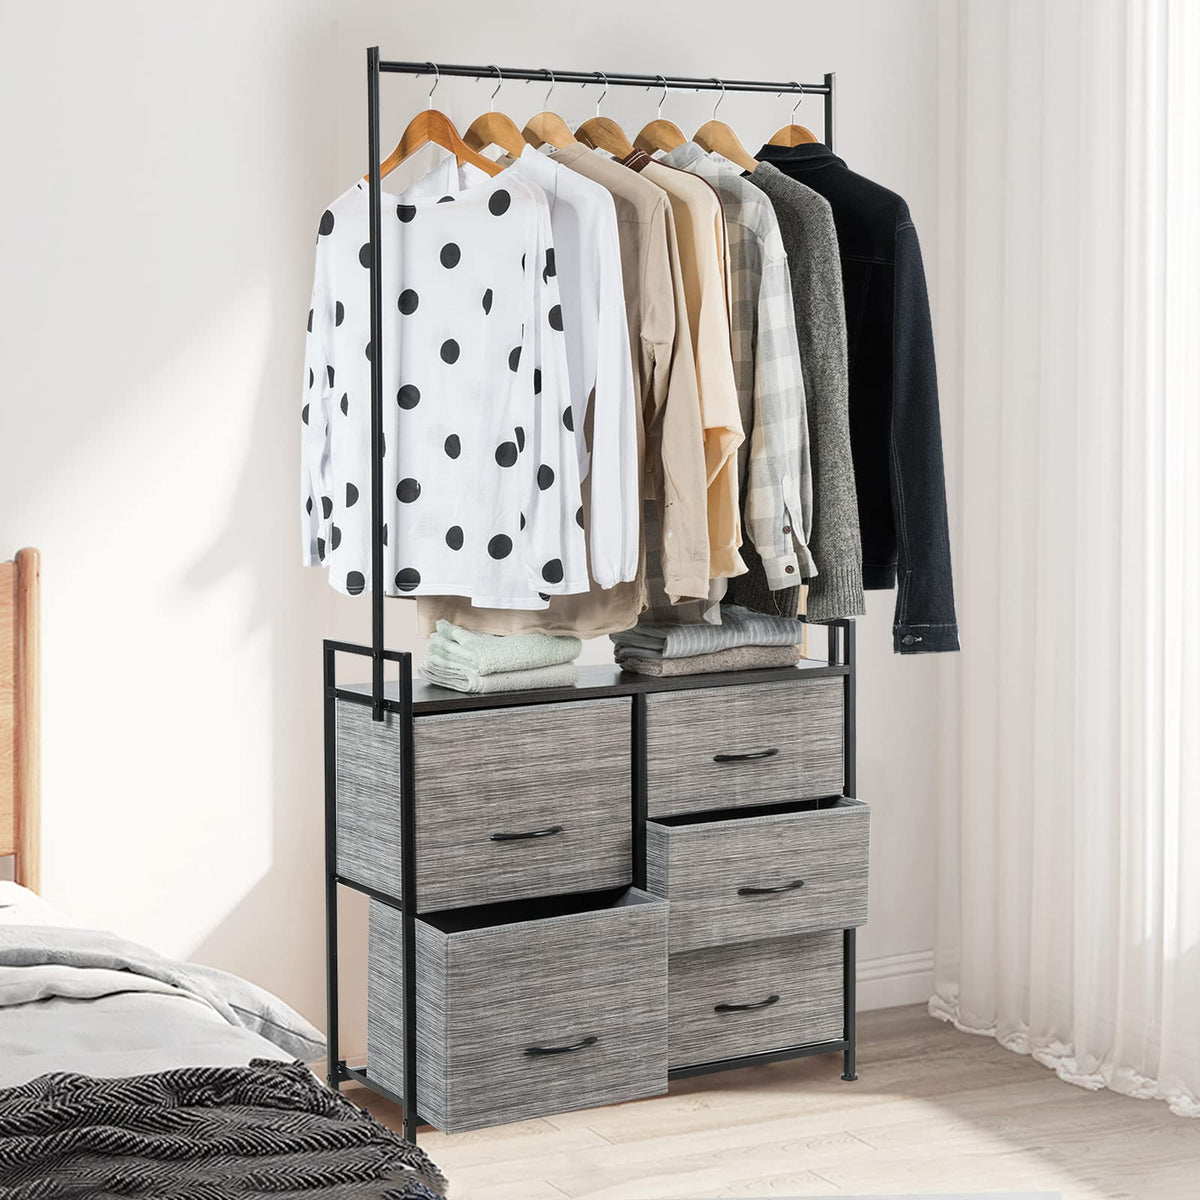 Giantex Clothing Rack w/ 5 Fabric Drawers, Closet Organizers and Storage, Dresser Wardrobe Closet